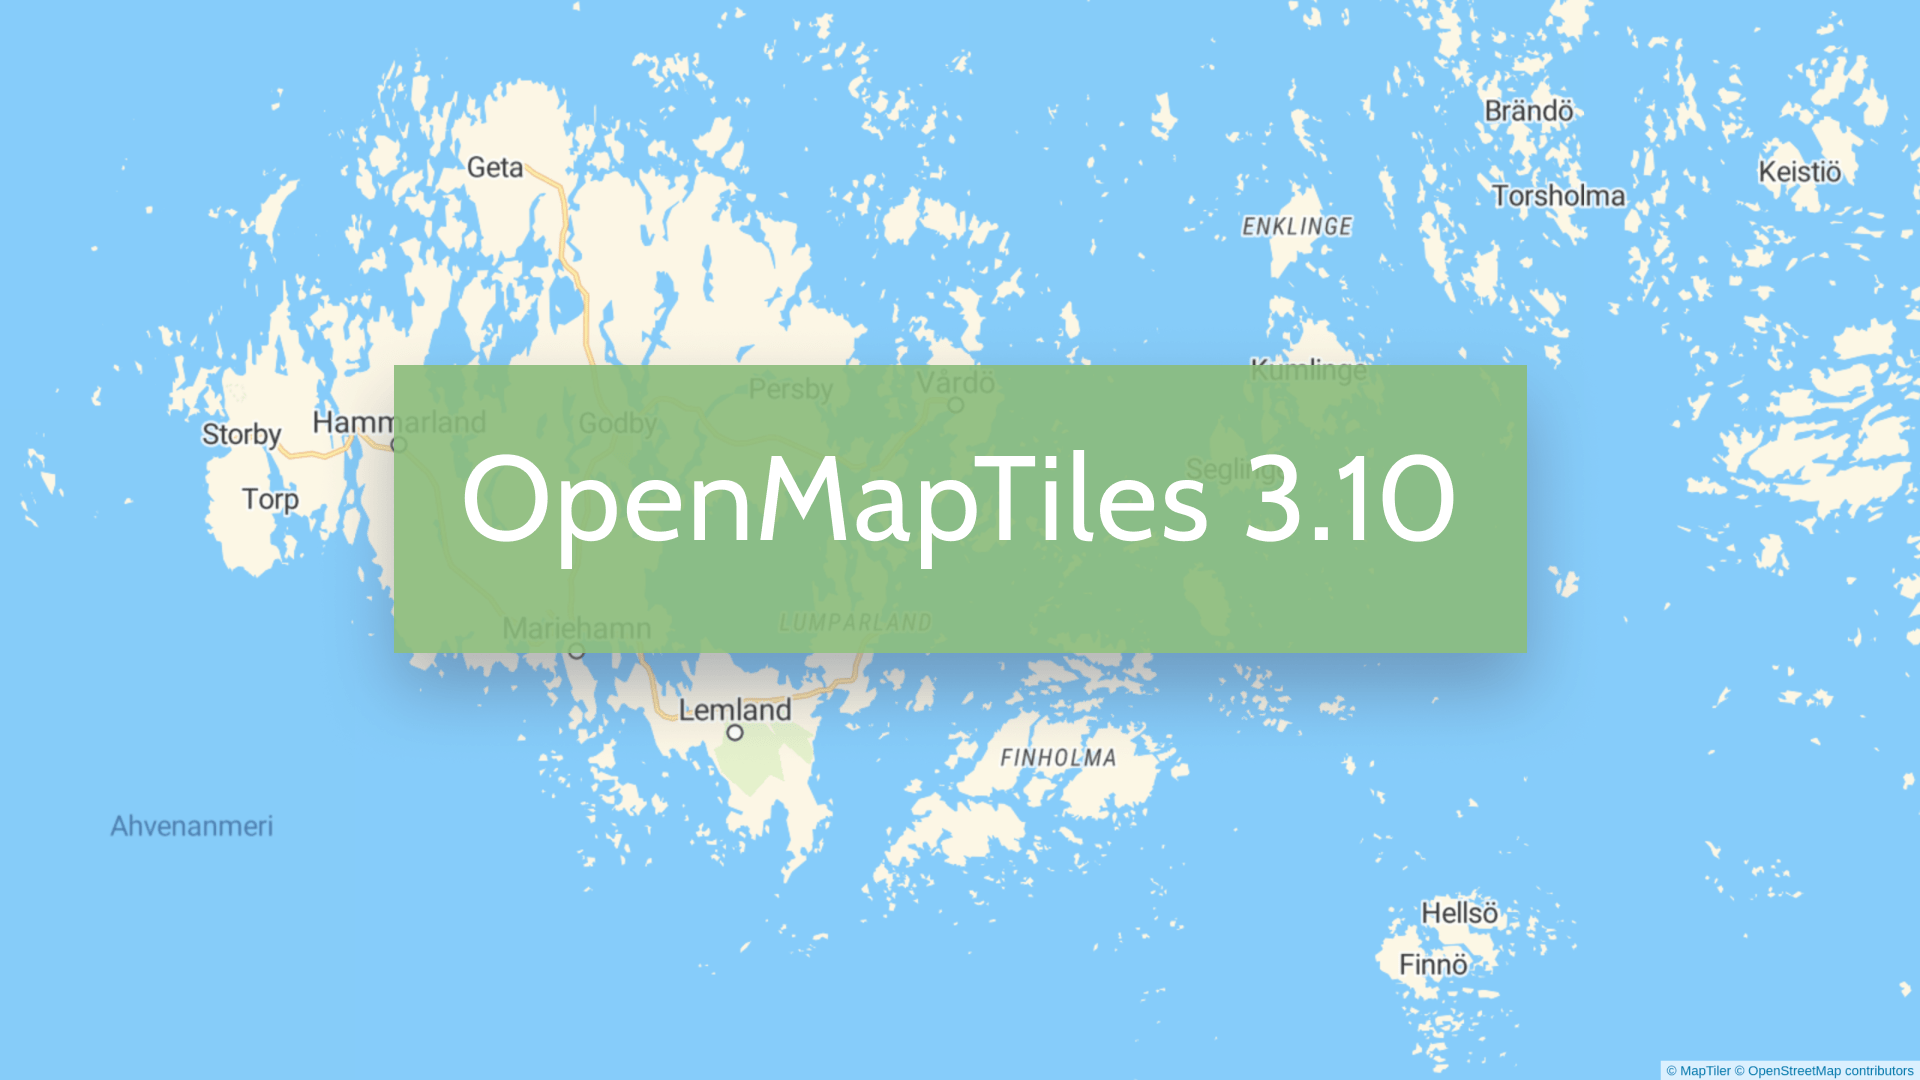 OpenMapTiles 3.10 improving water layer image